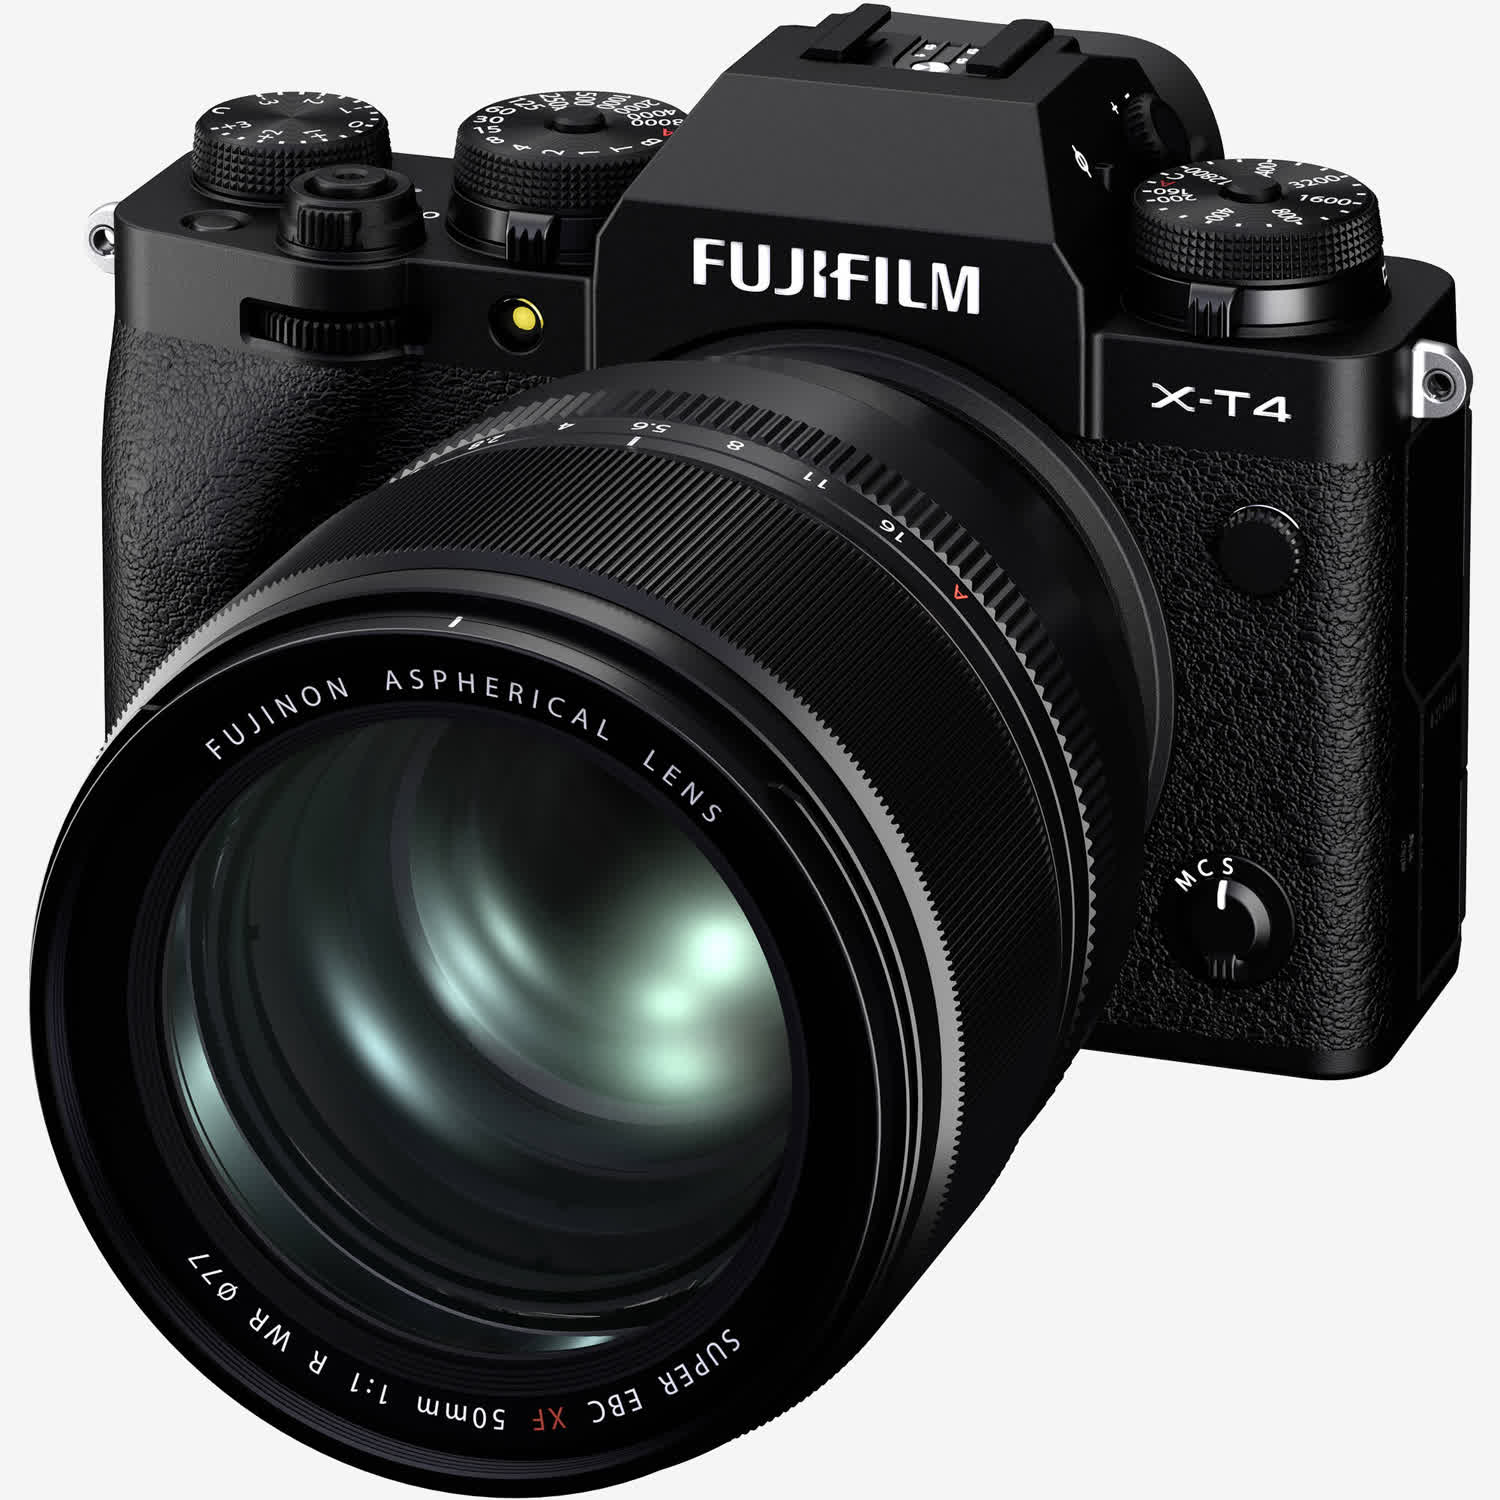 Fujifilm announces XF 50mm lens with f/1.0 aperture